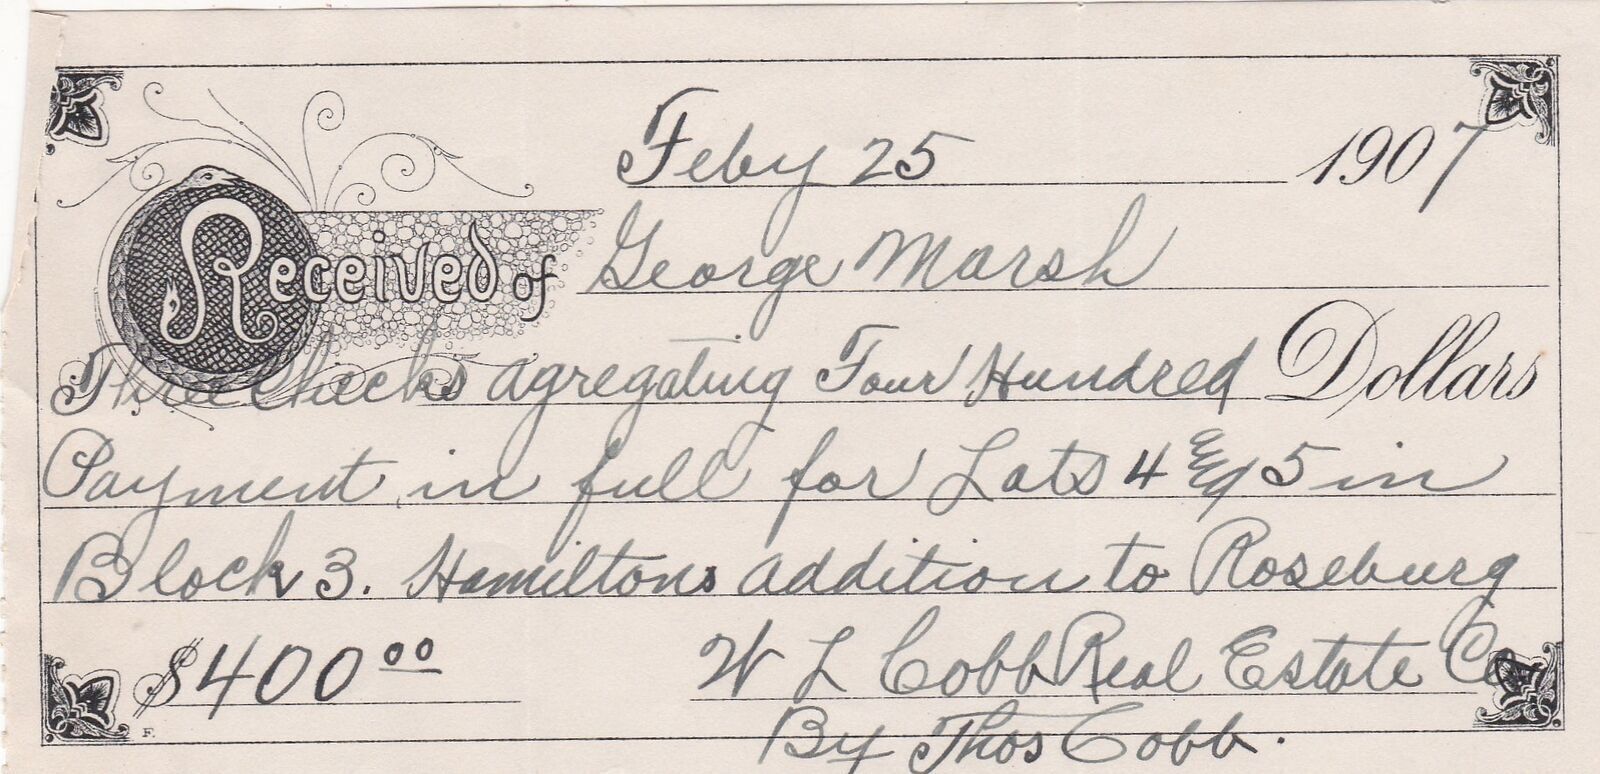 U.S. Recd George Marsh 1907 Lots Payment in Full Cobb Real Estate Receipt  42827